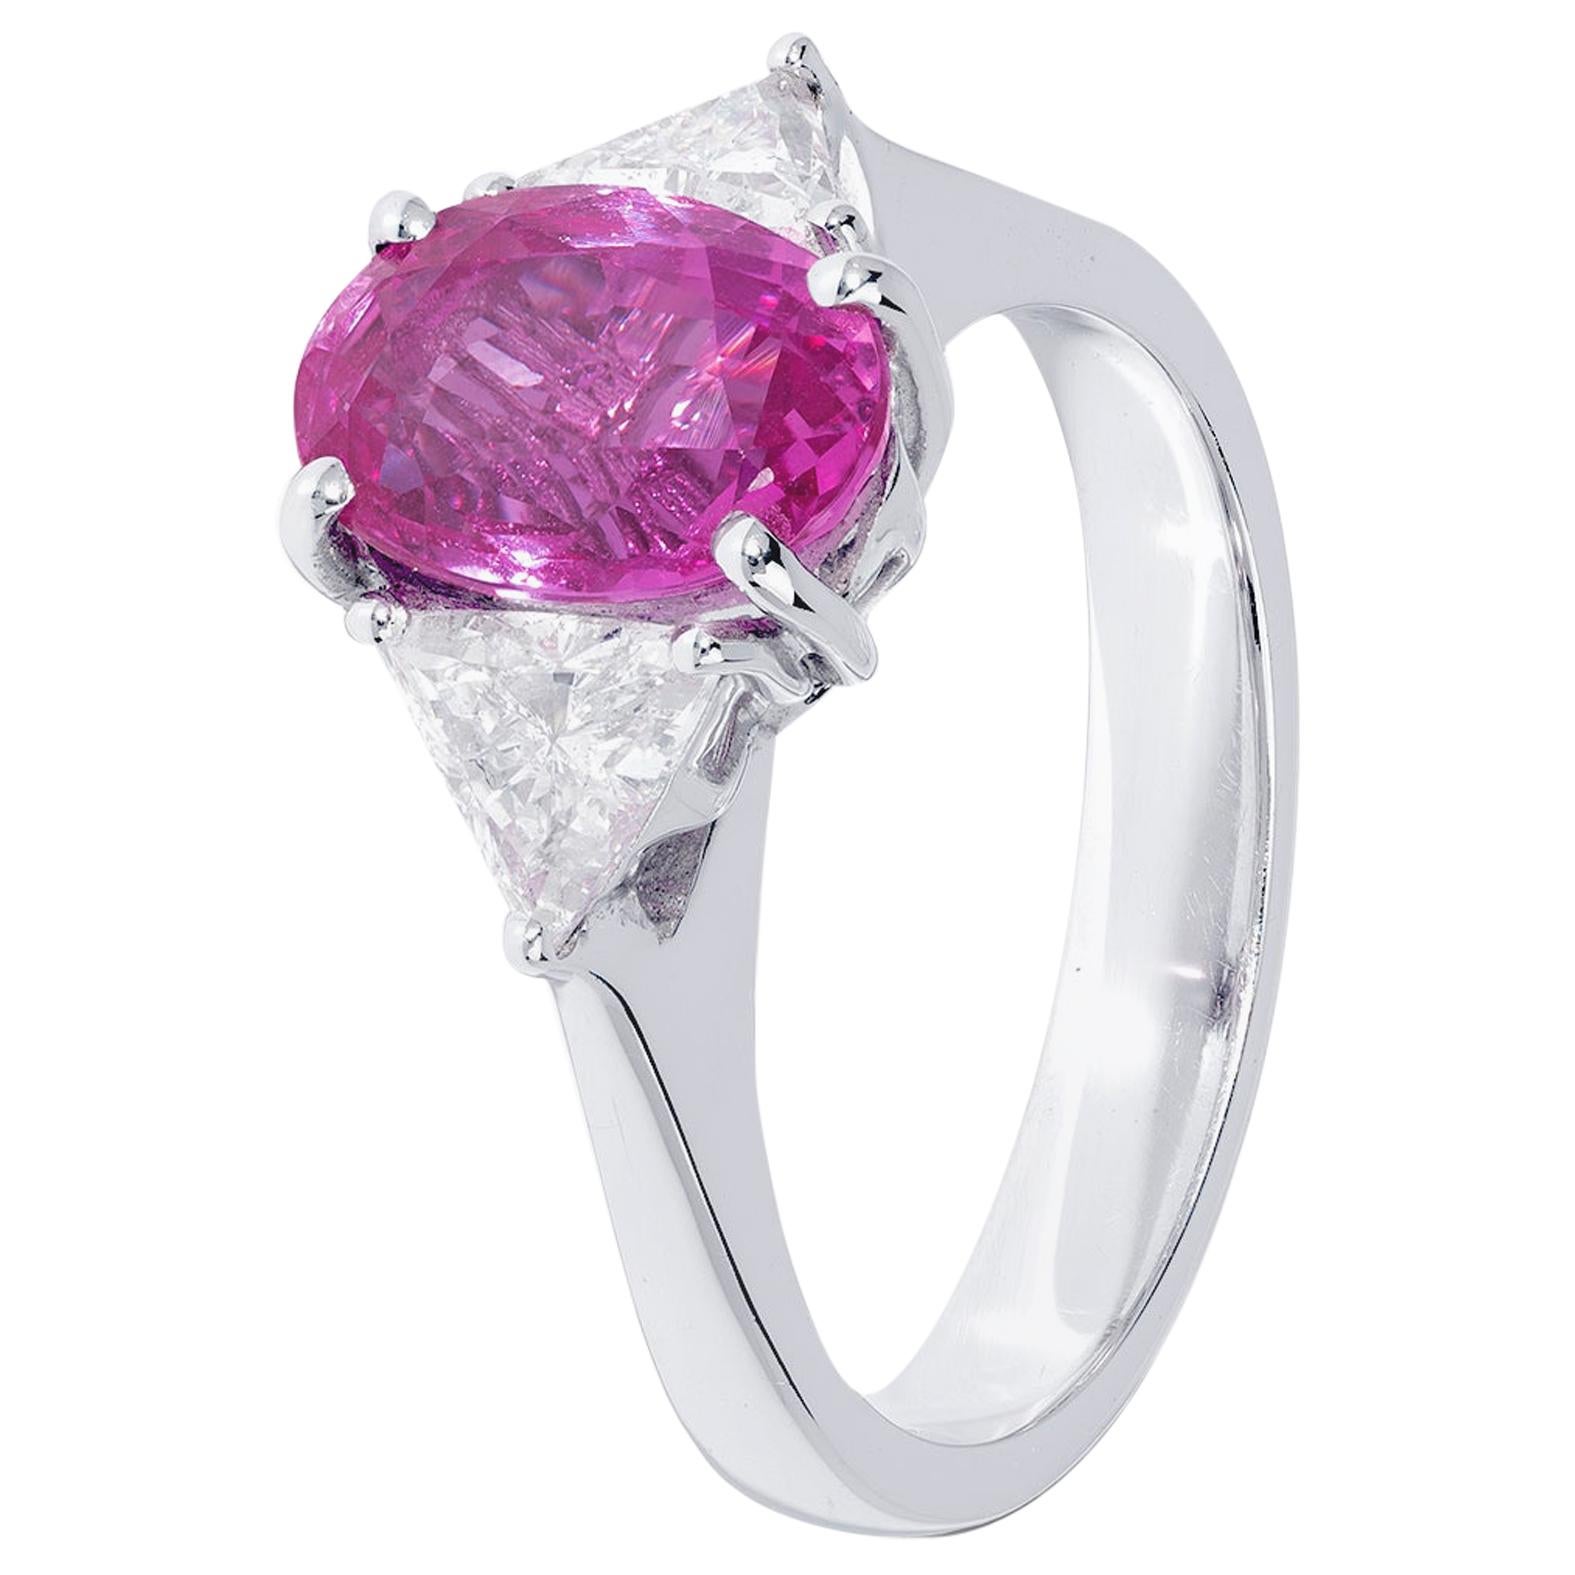 Unforgettable 3.20 Carat Pink Sapphire and White Diamond Three-Stone Ring